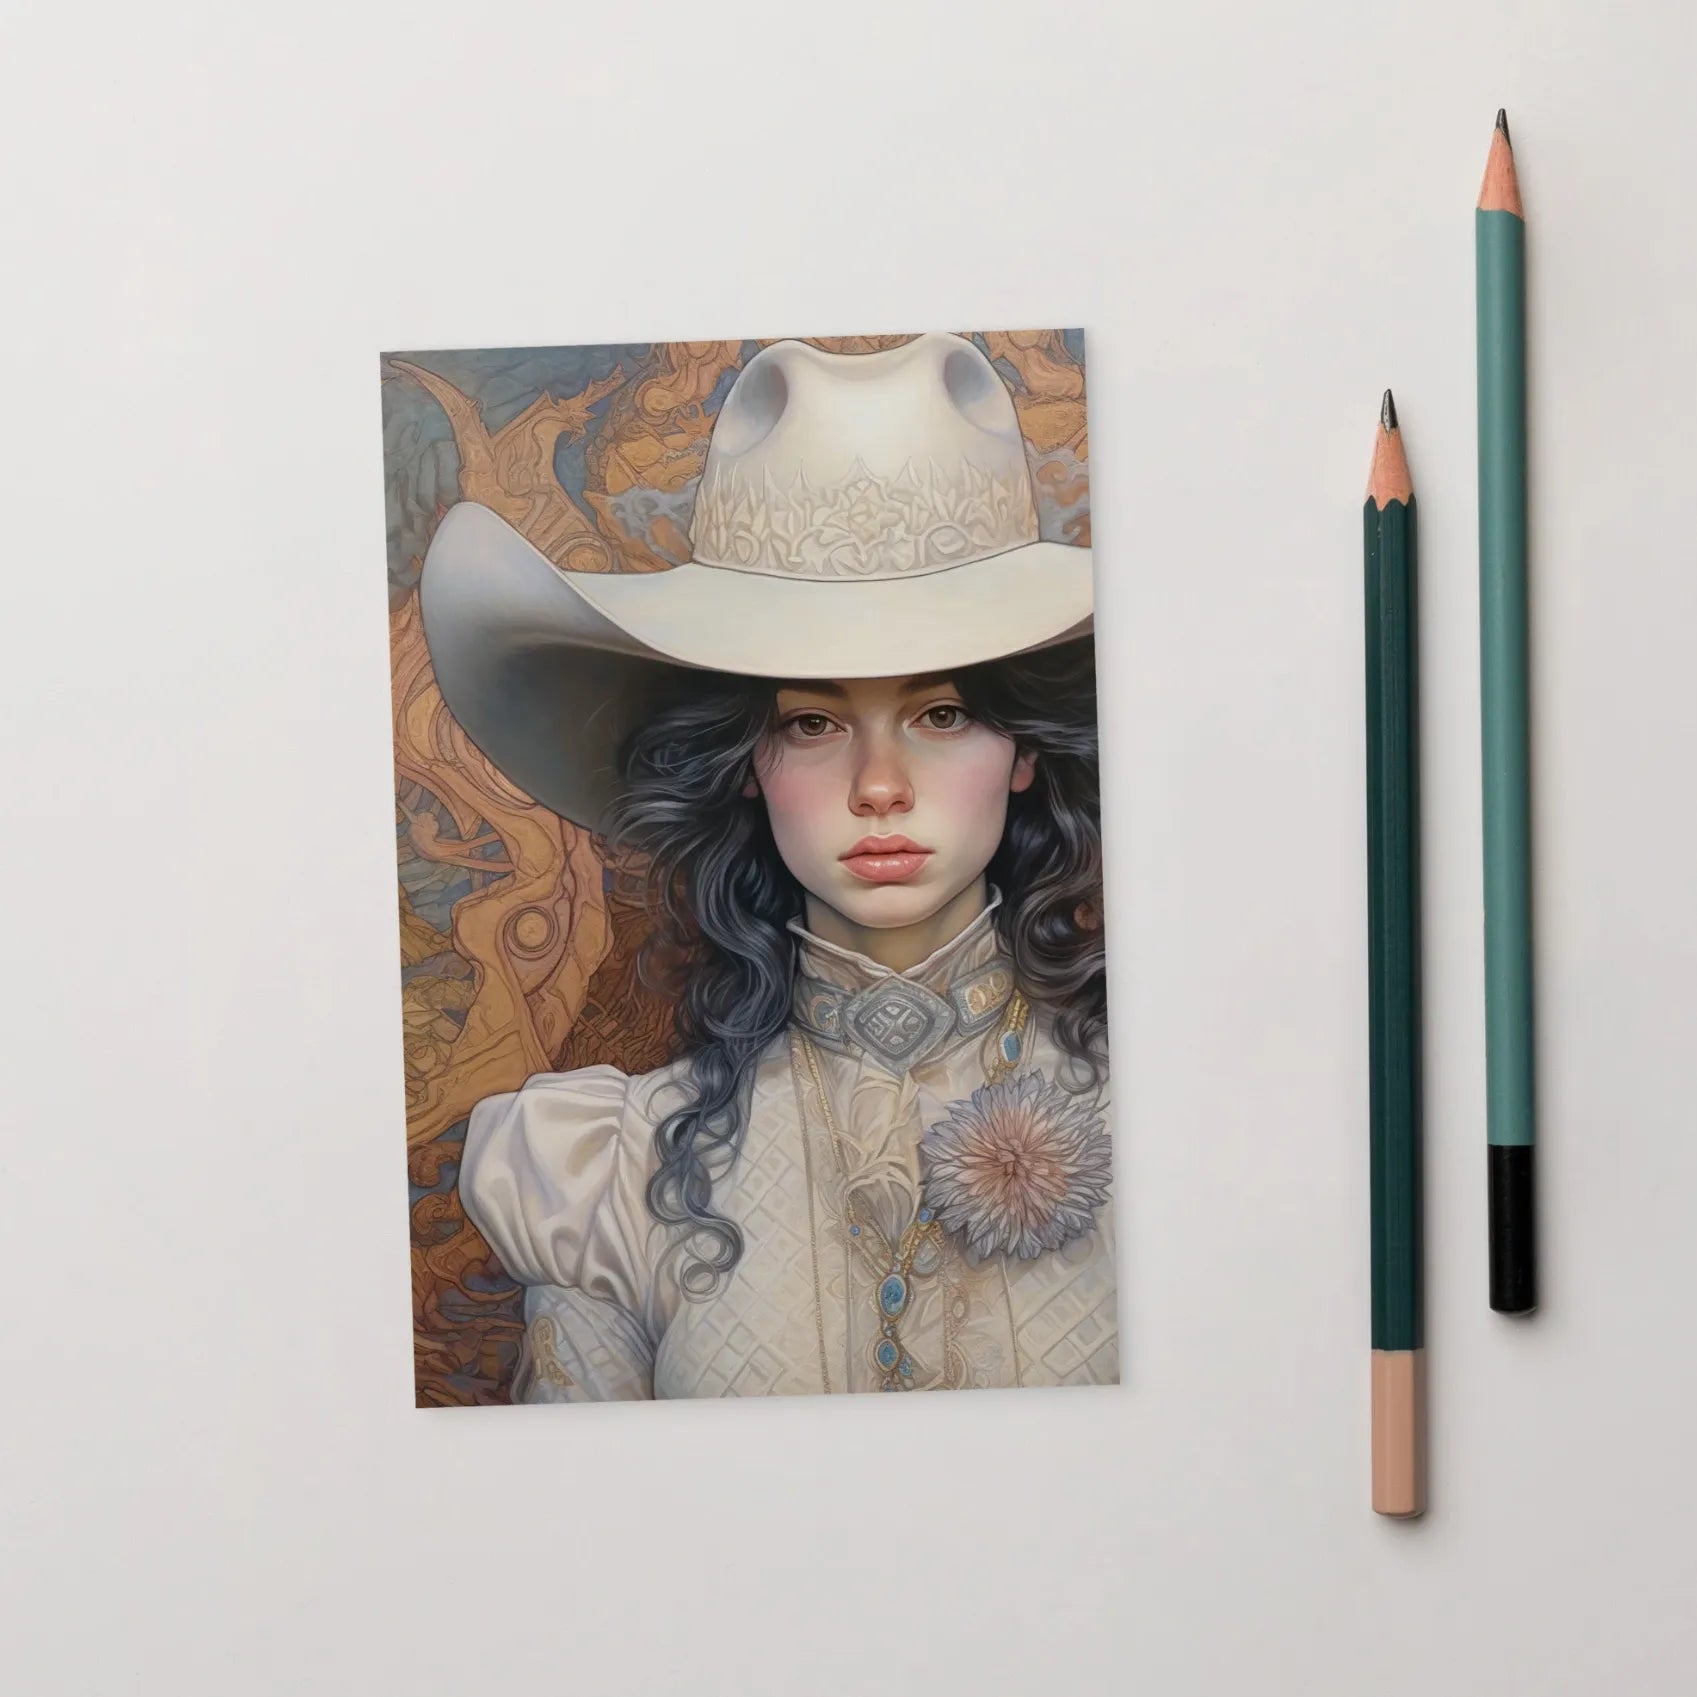 Helena - Lesbian Cowgirl Art Print - Wlw Sapphic Queerart - 4’x6’ - Posters Prints & Visual Artwork - Aesthetic Art